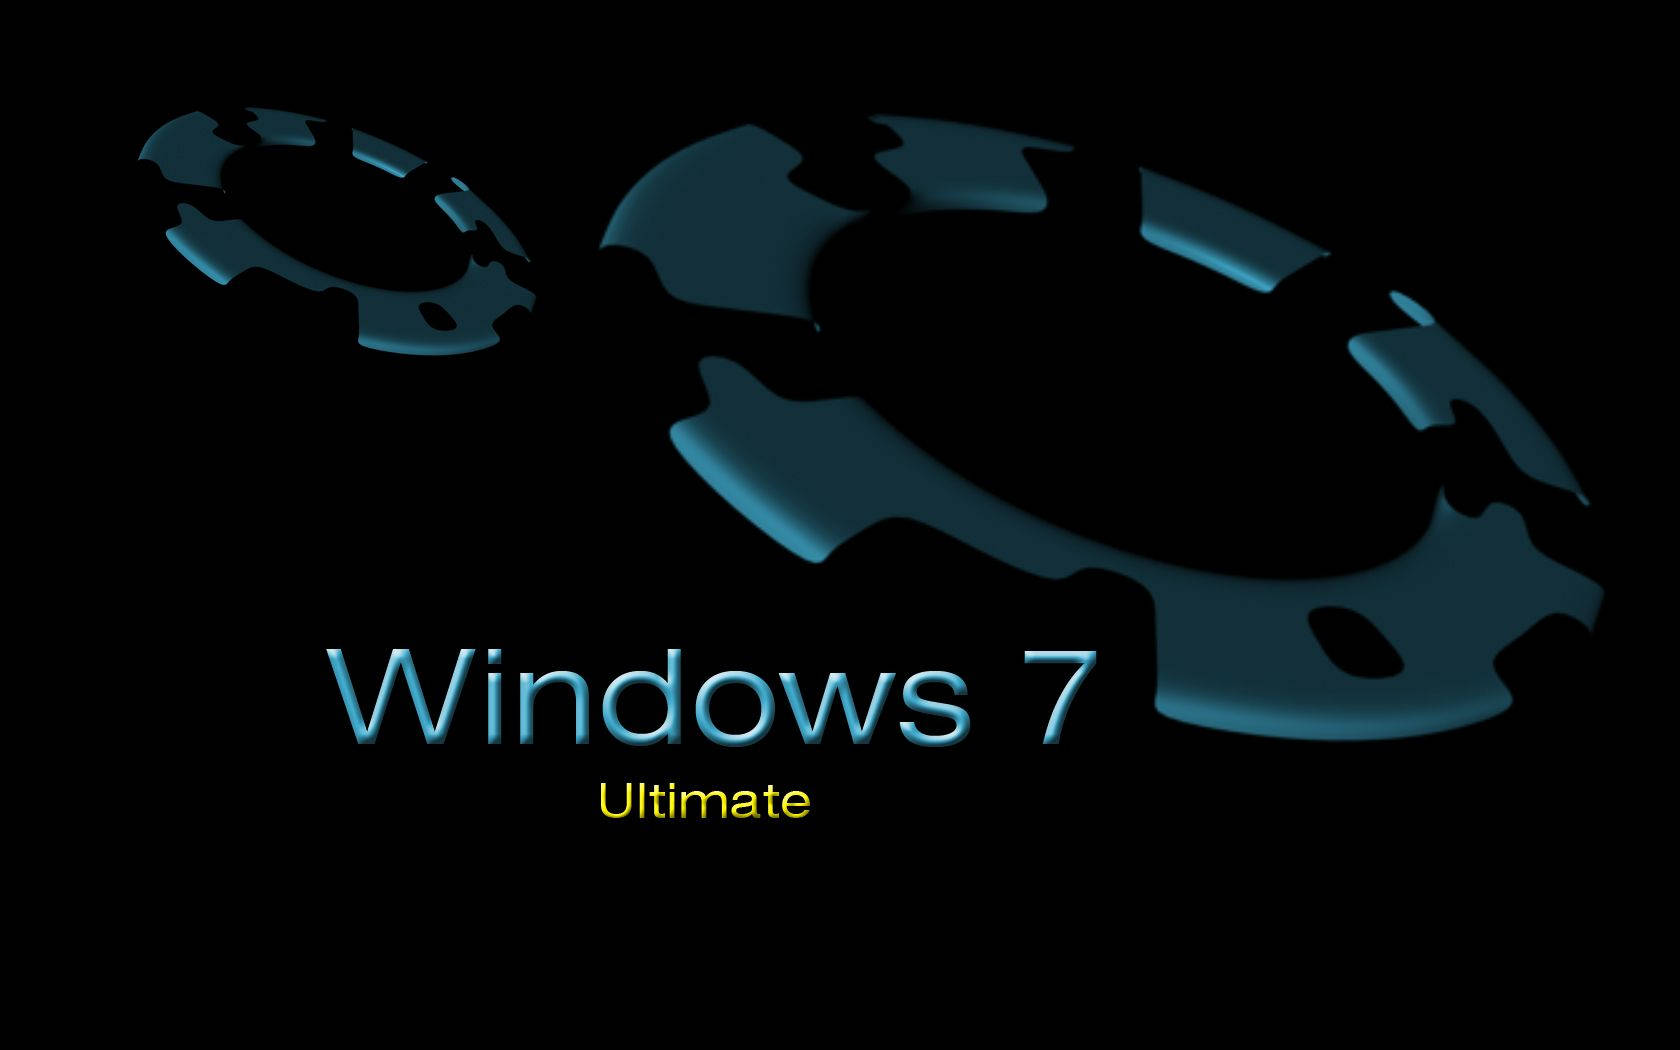 Ultimate Window 7 Background